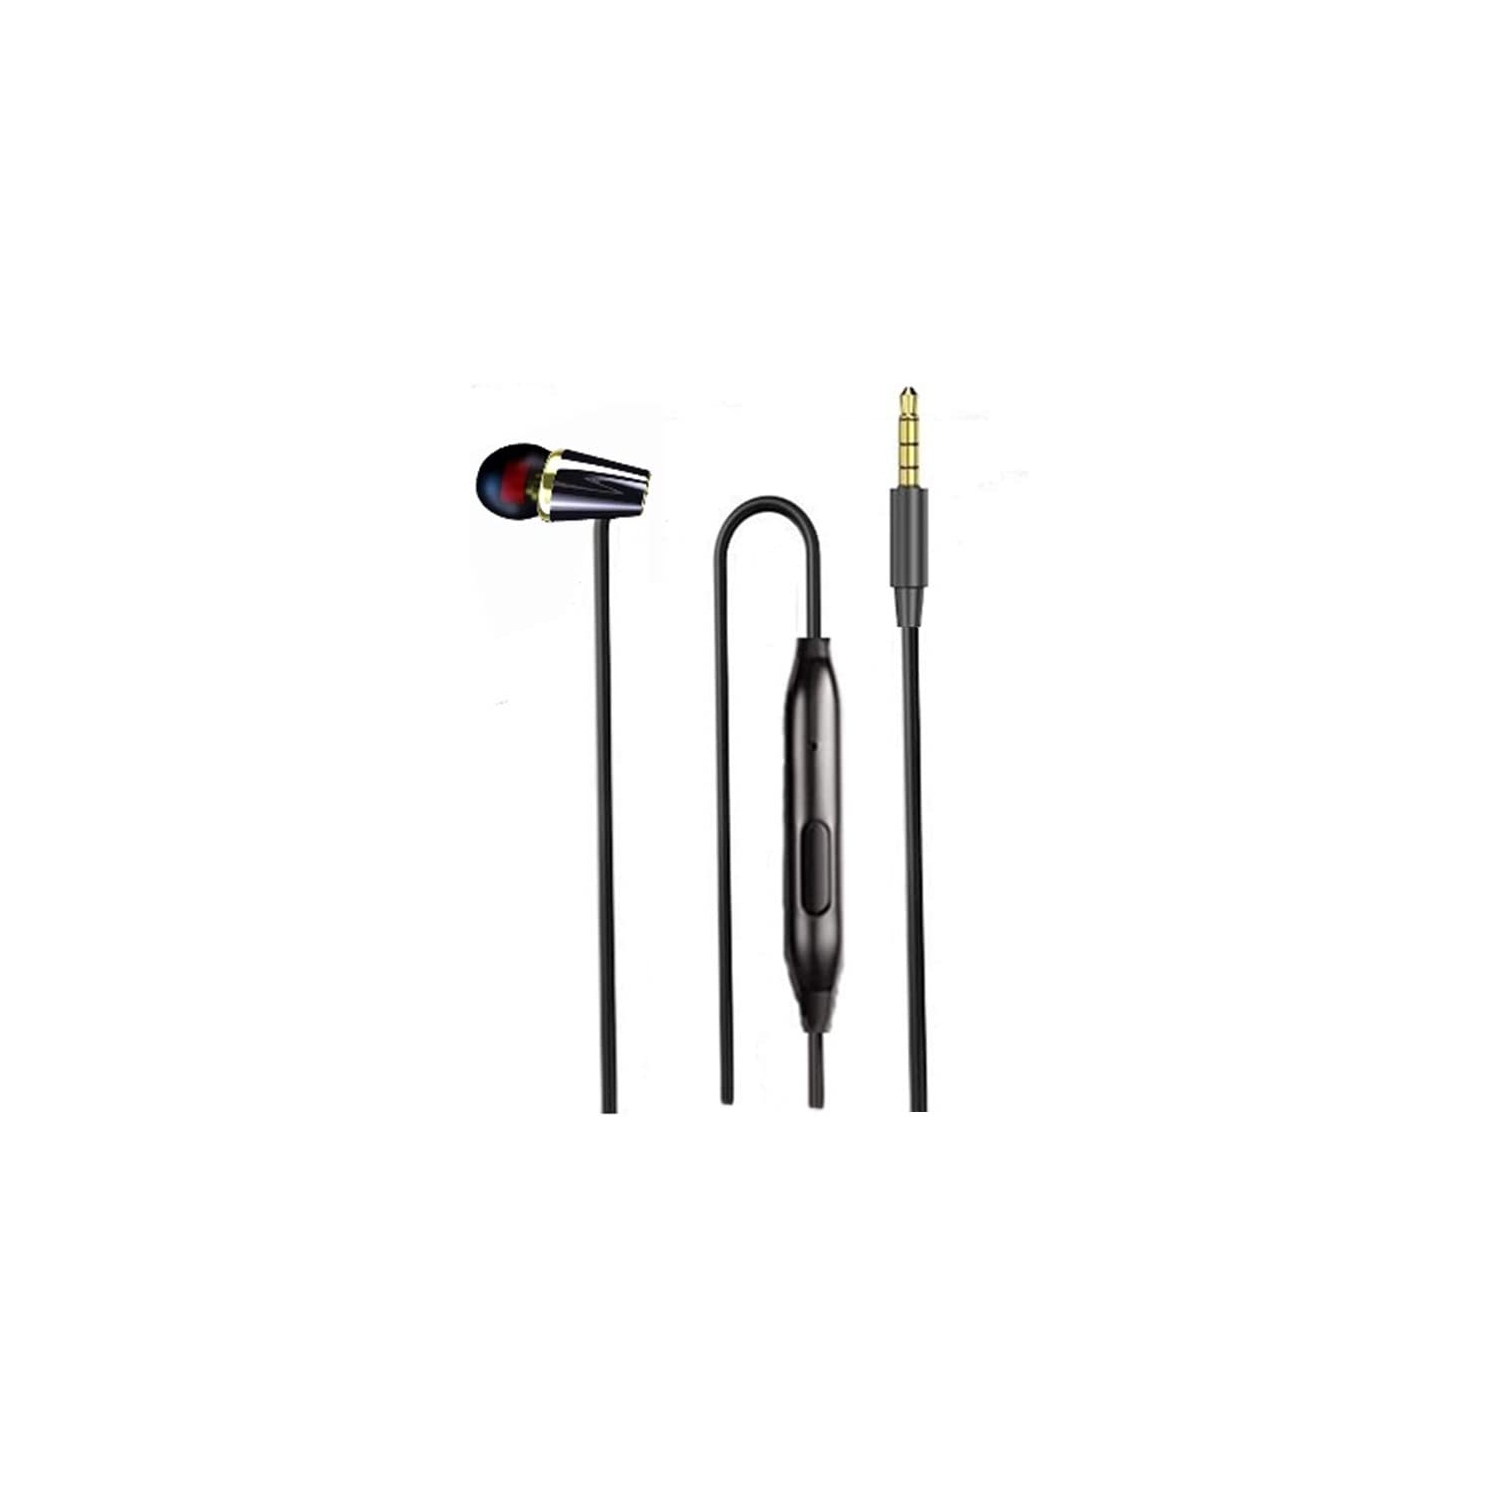 Dolaer Single Earphone One Side Earplugs with Microphone Single Earbud Stereo Sound Reinforced Cord for iPhone, iPod, iPad, Samsung,Radio